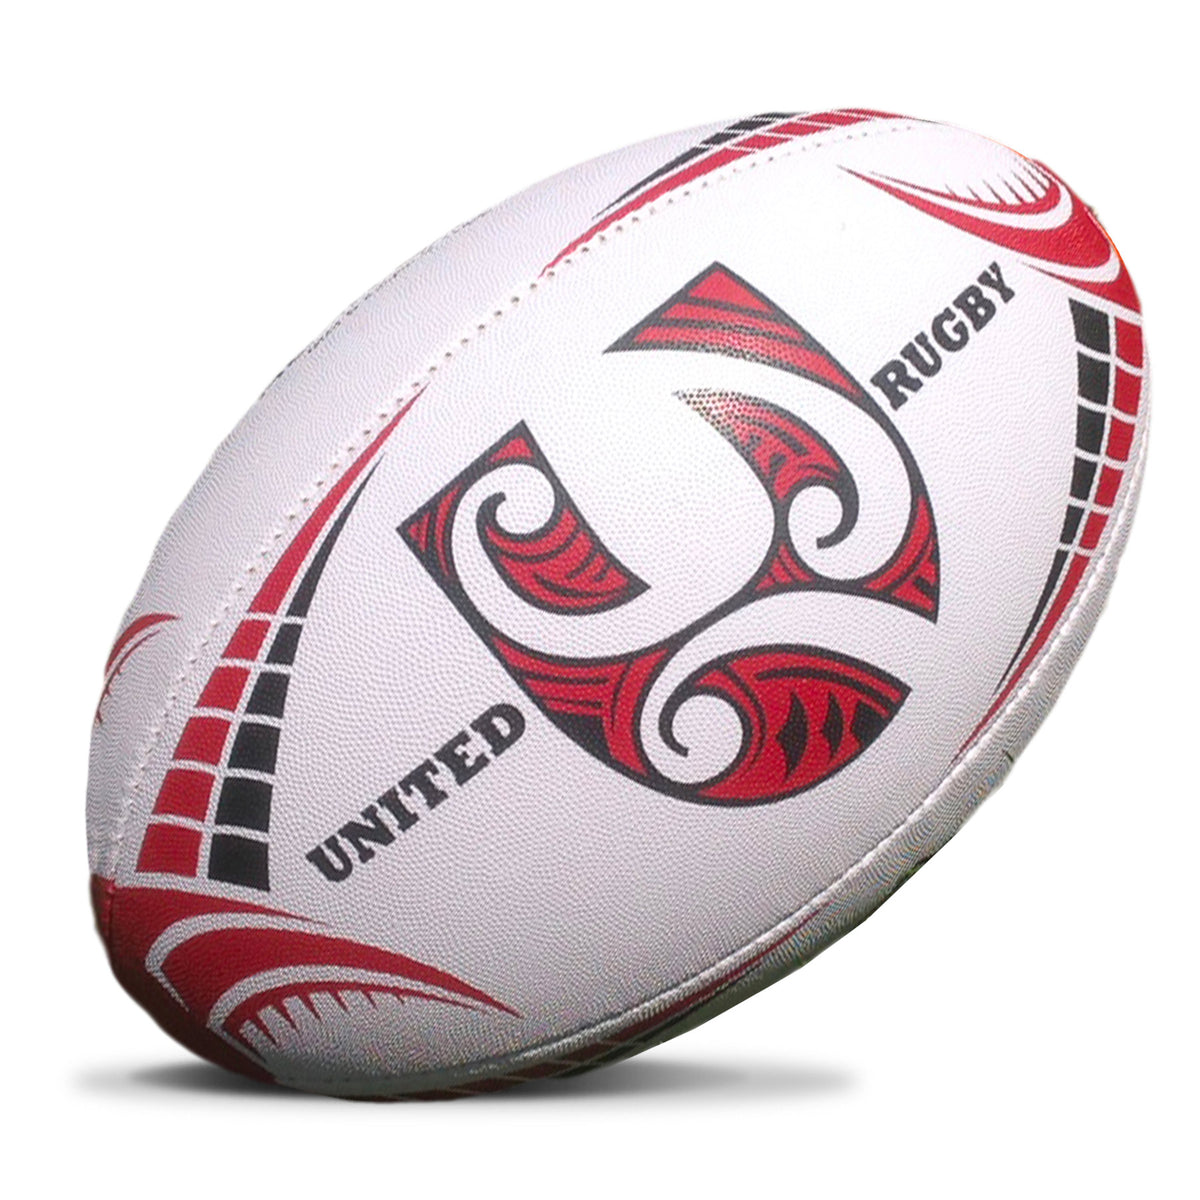 Get latest Rhino Custom Rugby Ball Vortex Elite Size 5 at best price. –  Rhino Rugby